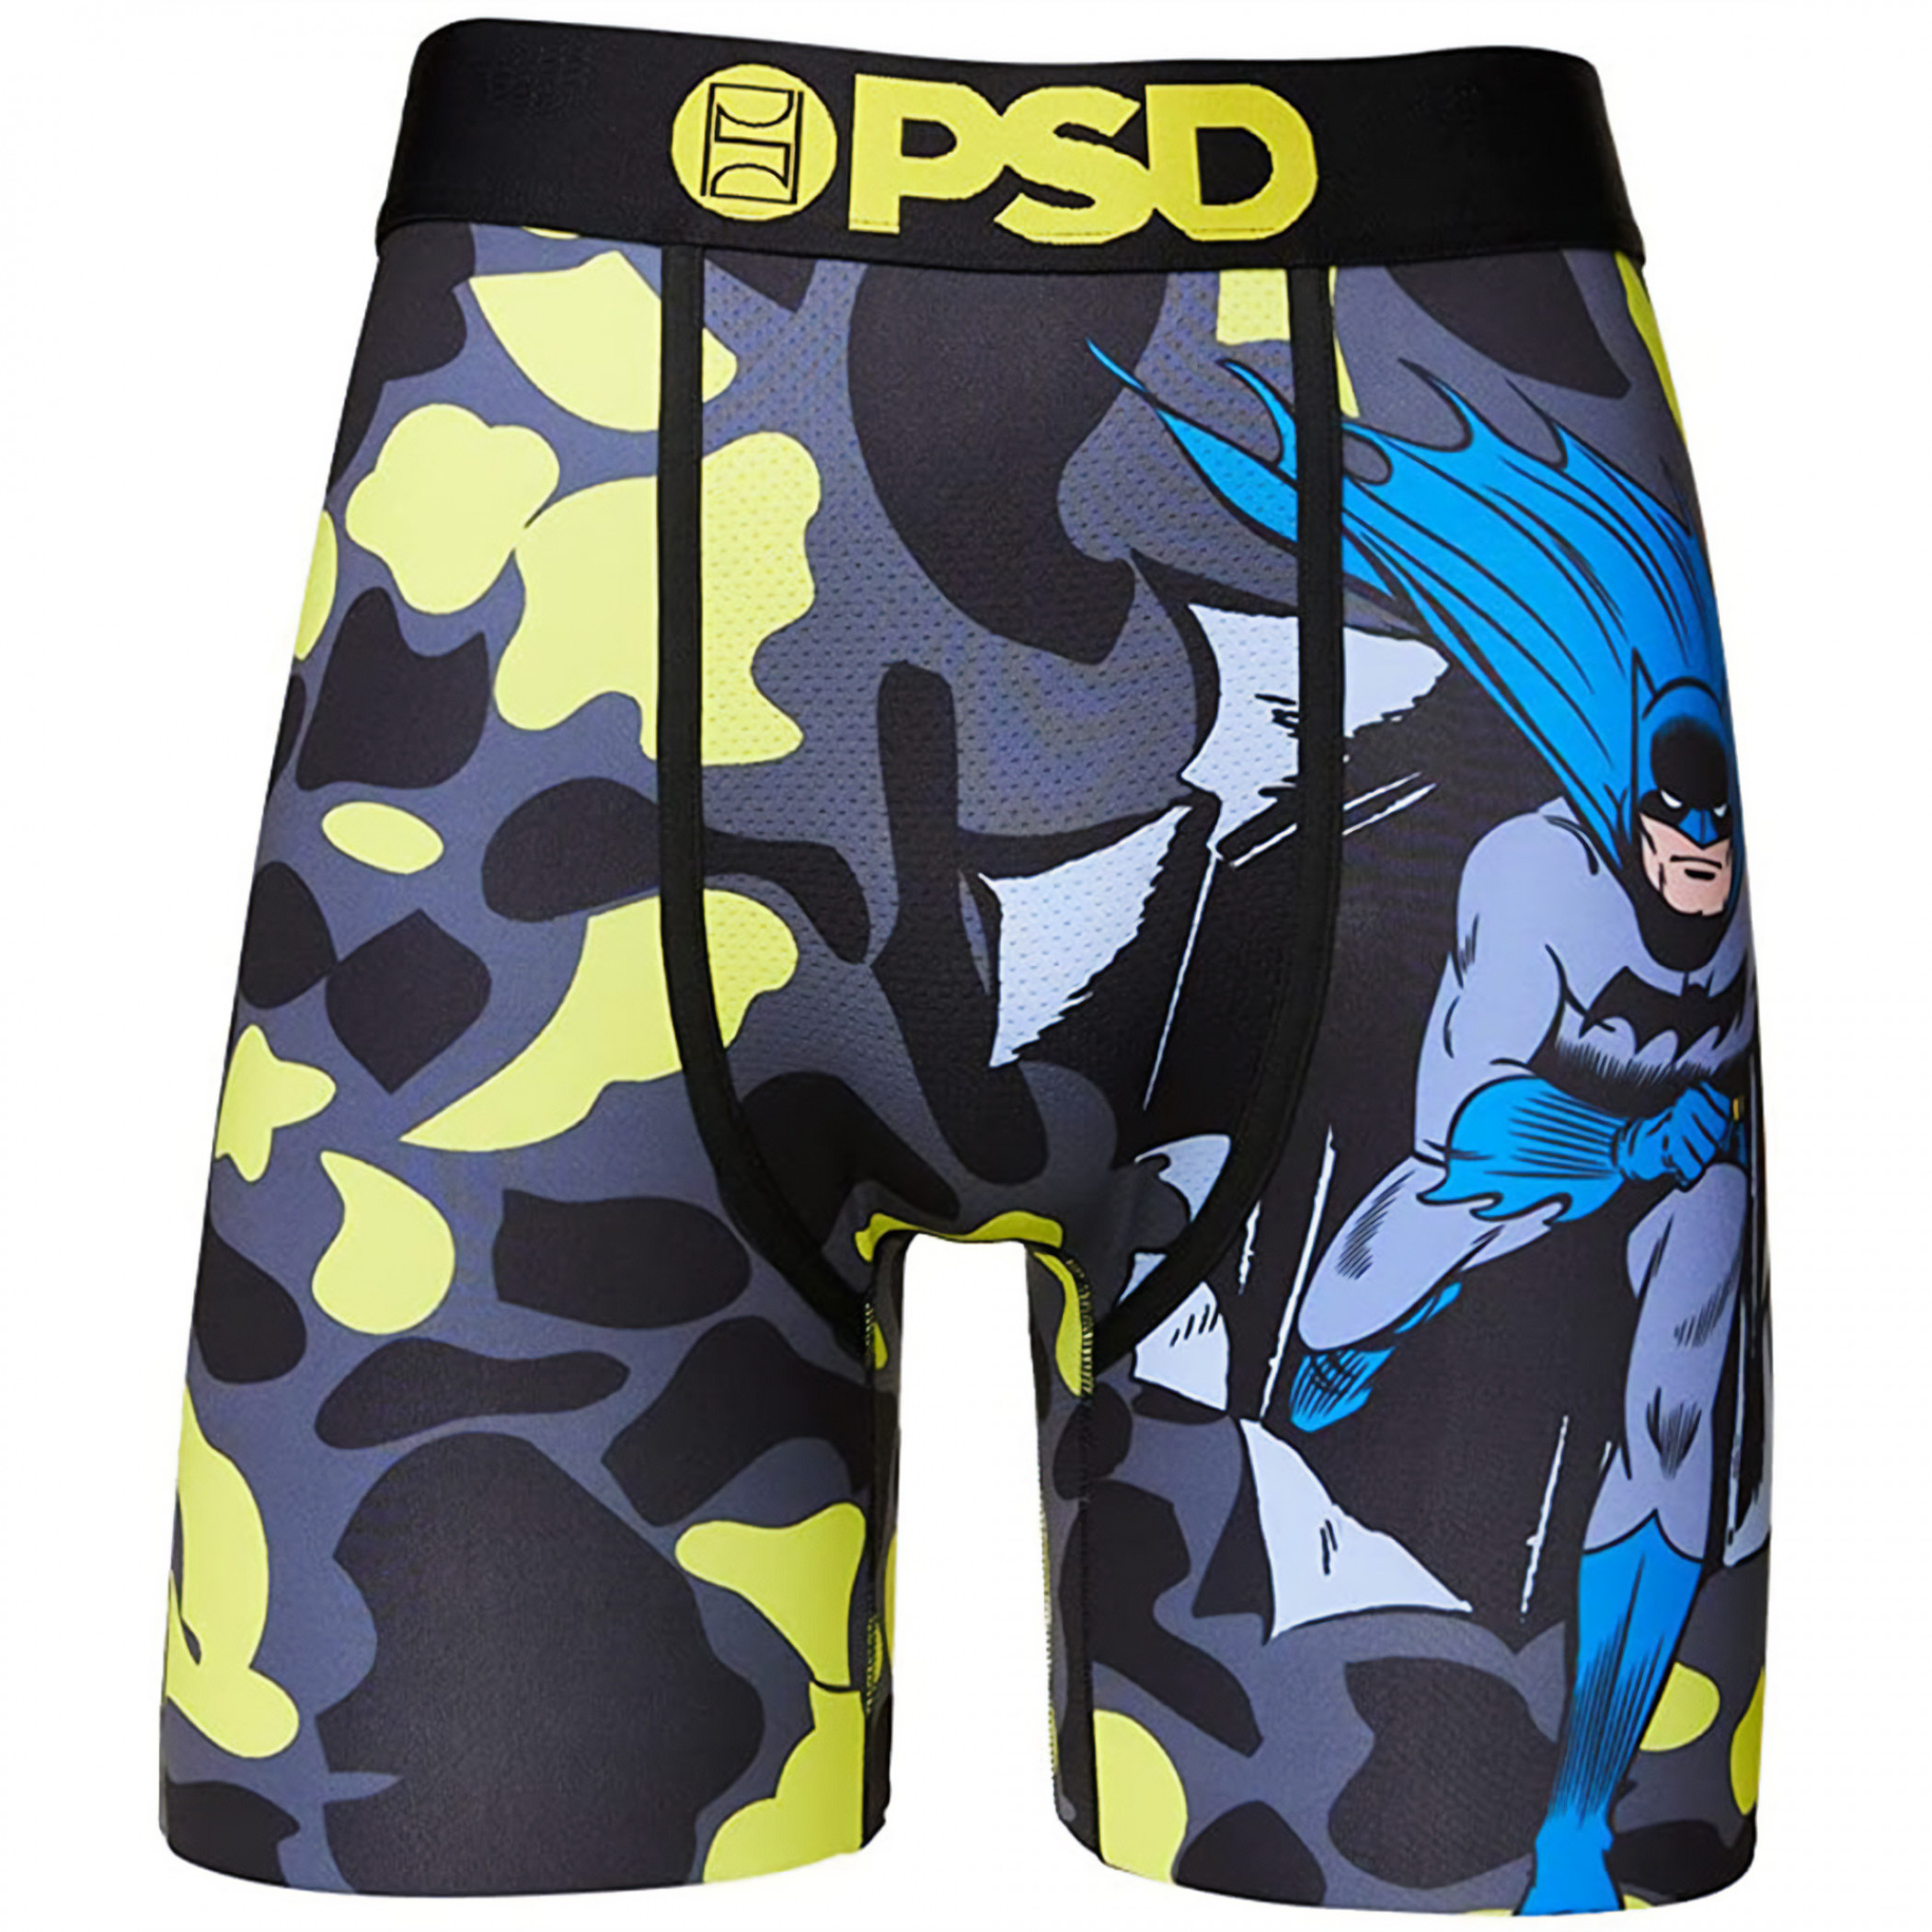 Ninja Pattern  Men's boxer briefs, Psd boxers, Mens shorts outfits